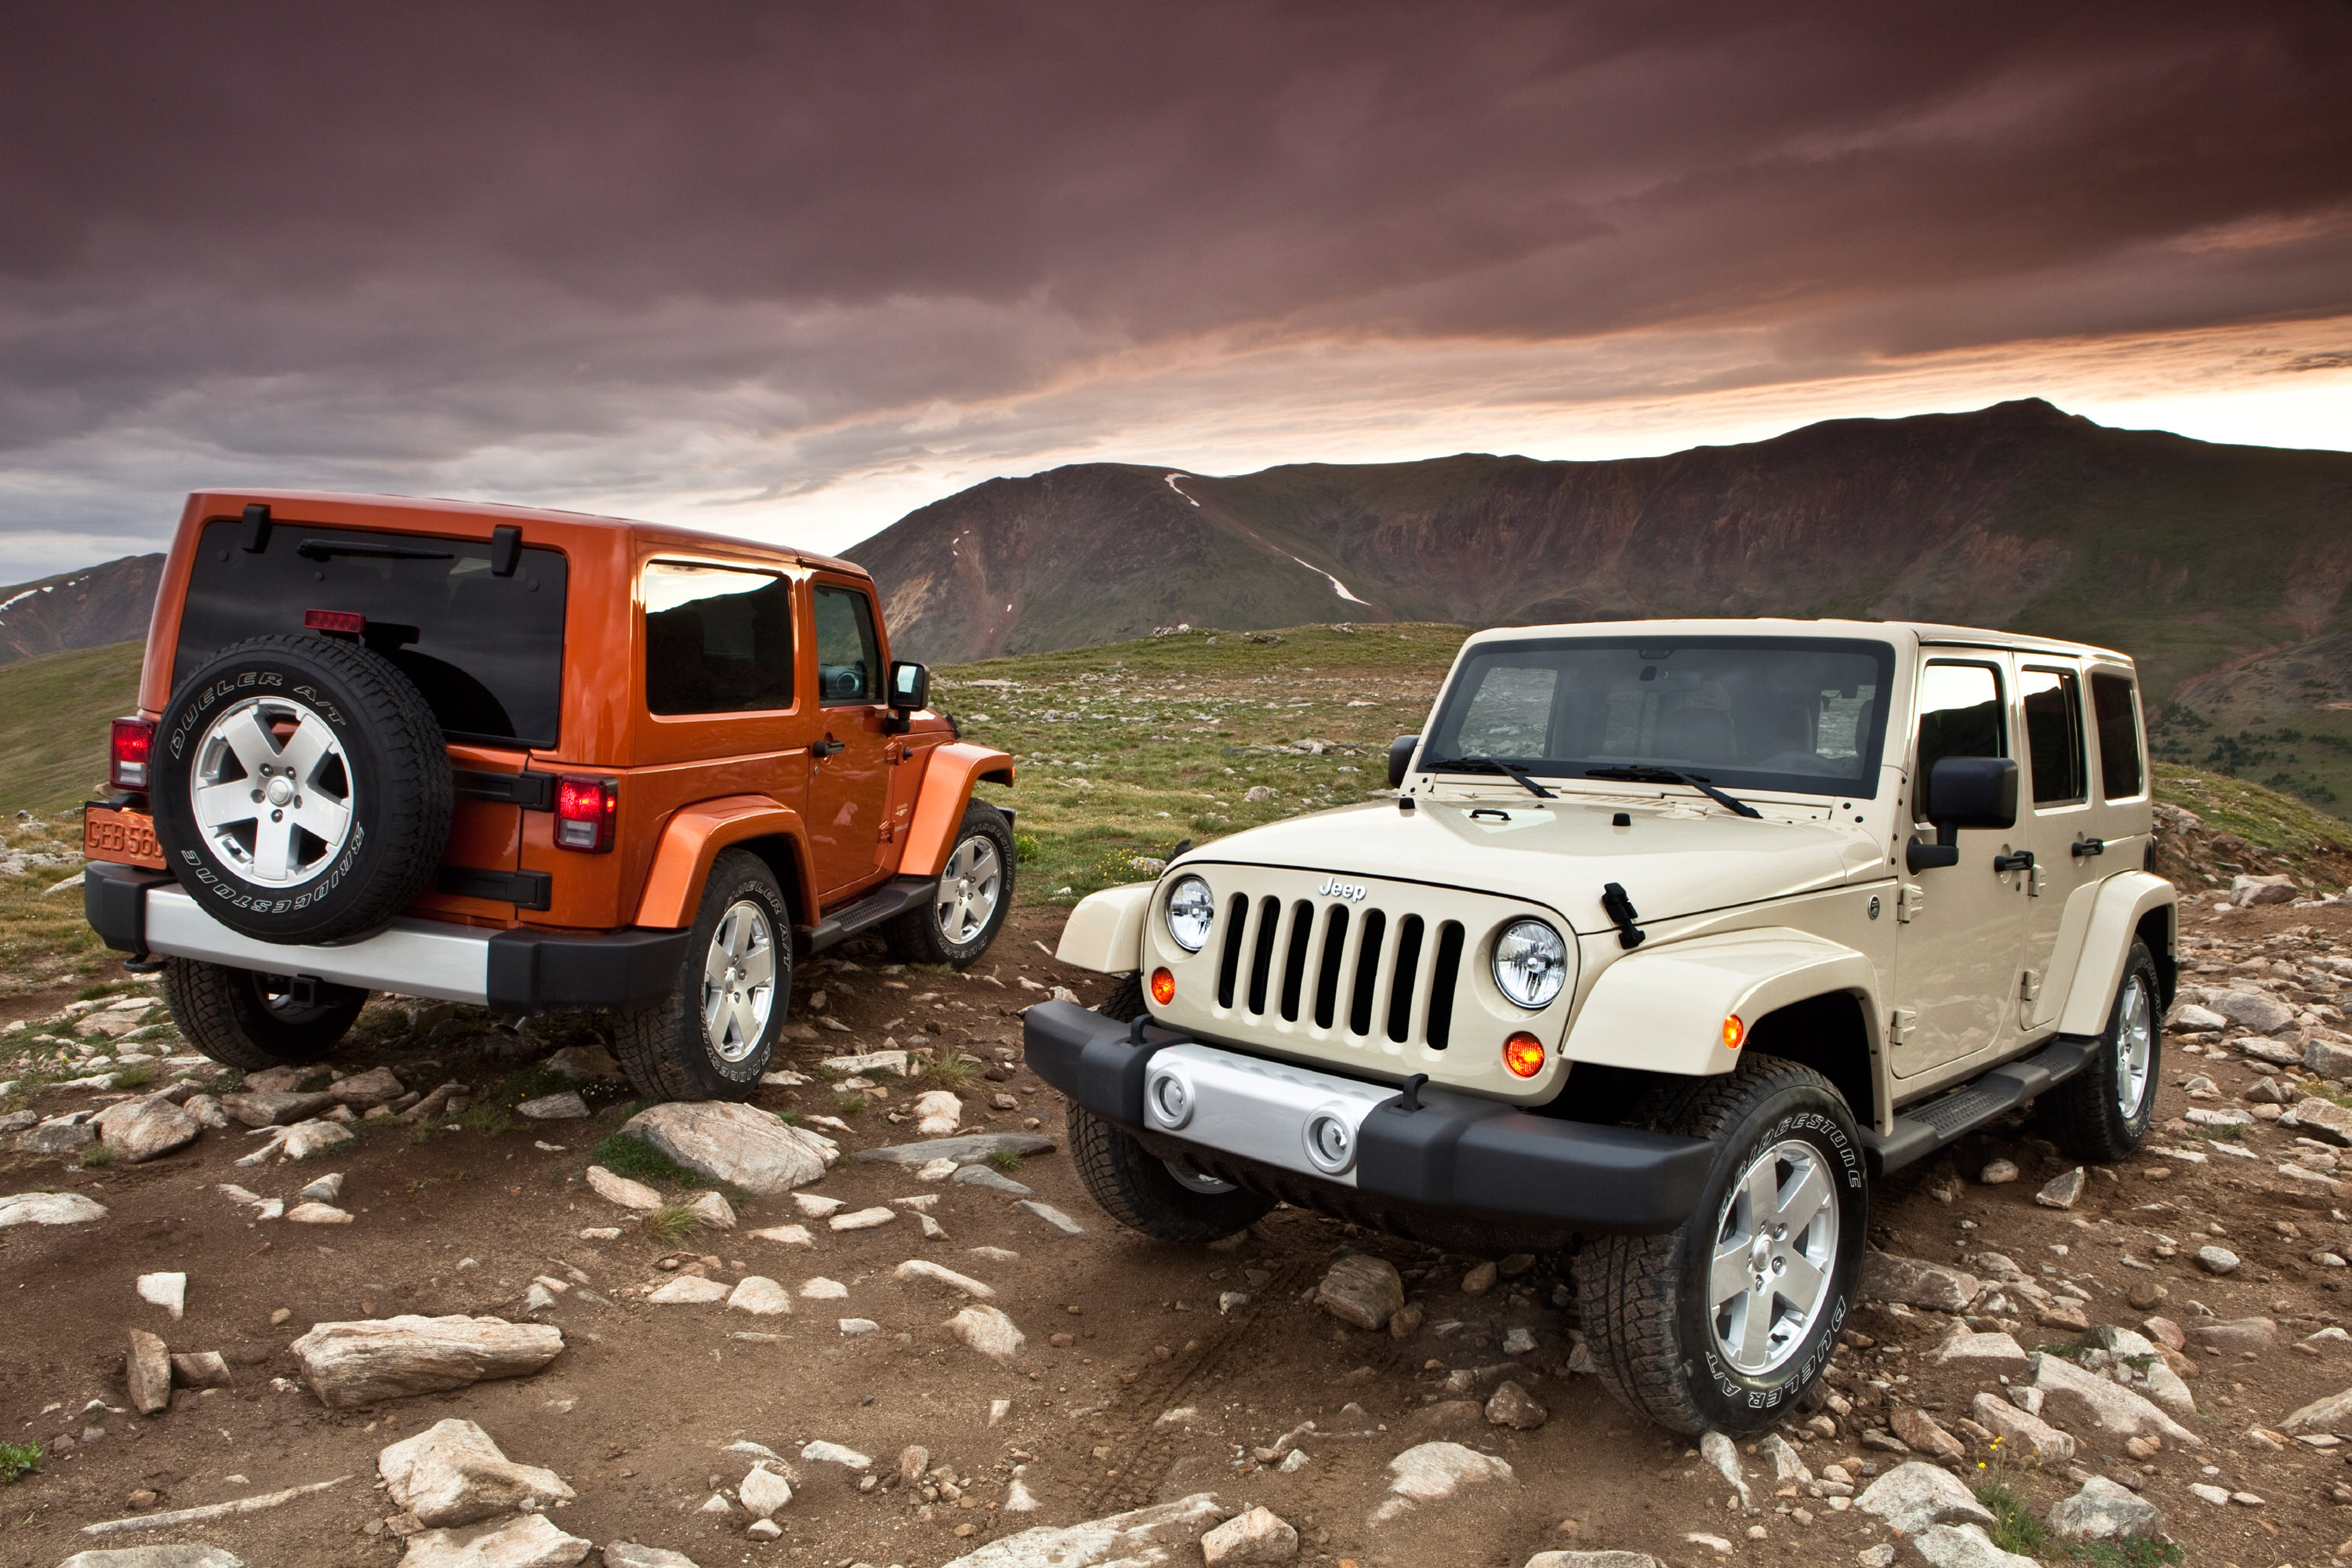 Jeep part. Джип Вранглер 1. Jeep Wrangler 2011. Jeep Wrangler Unlimited 2011. Jeep Wrangler 2011 Unlimited Sahara.